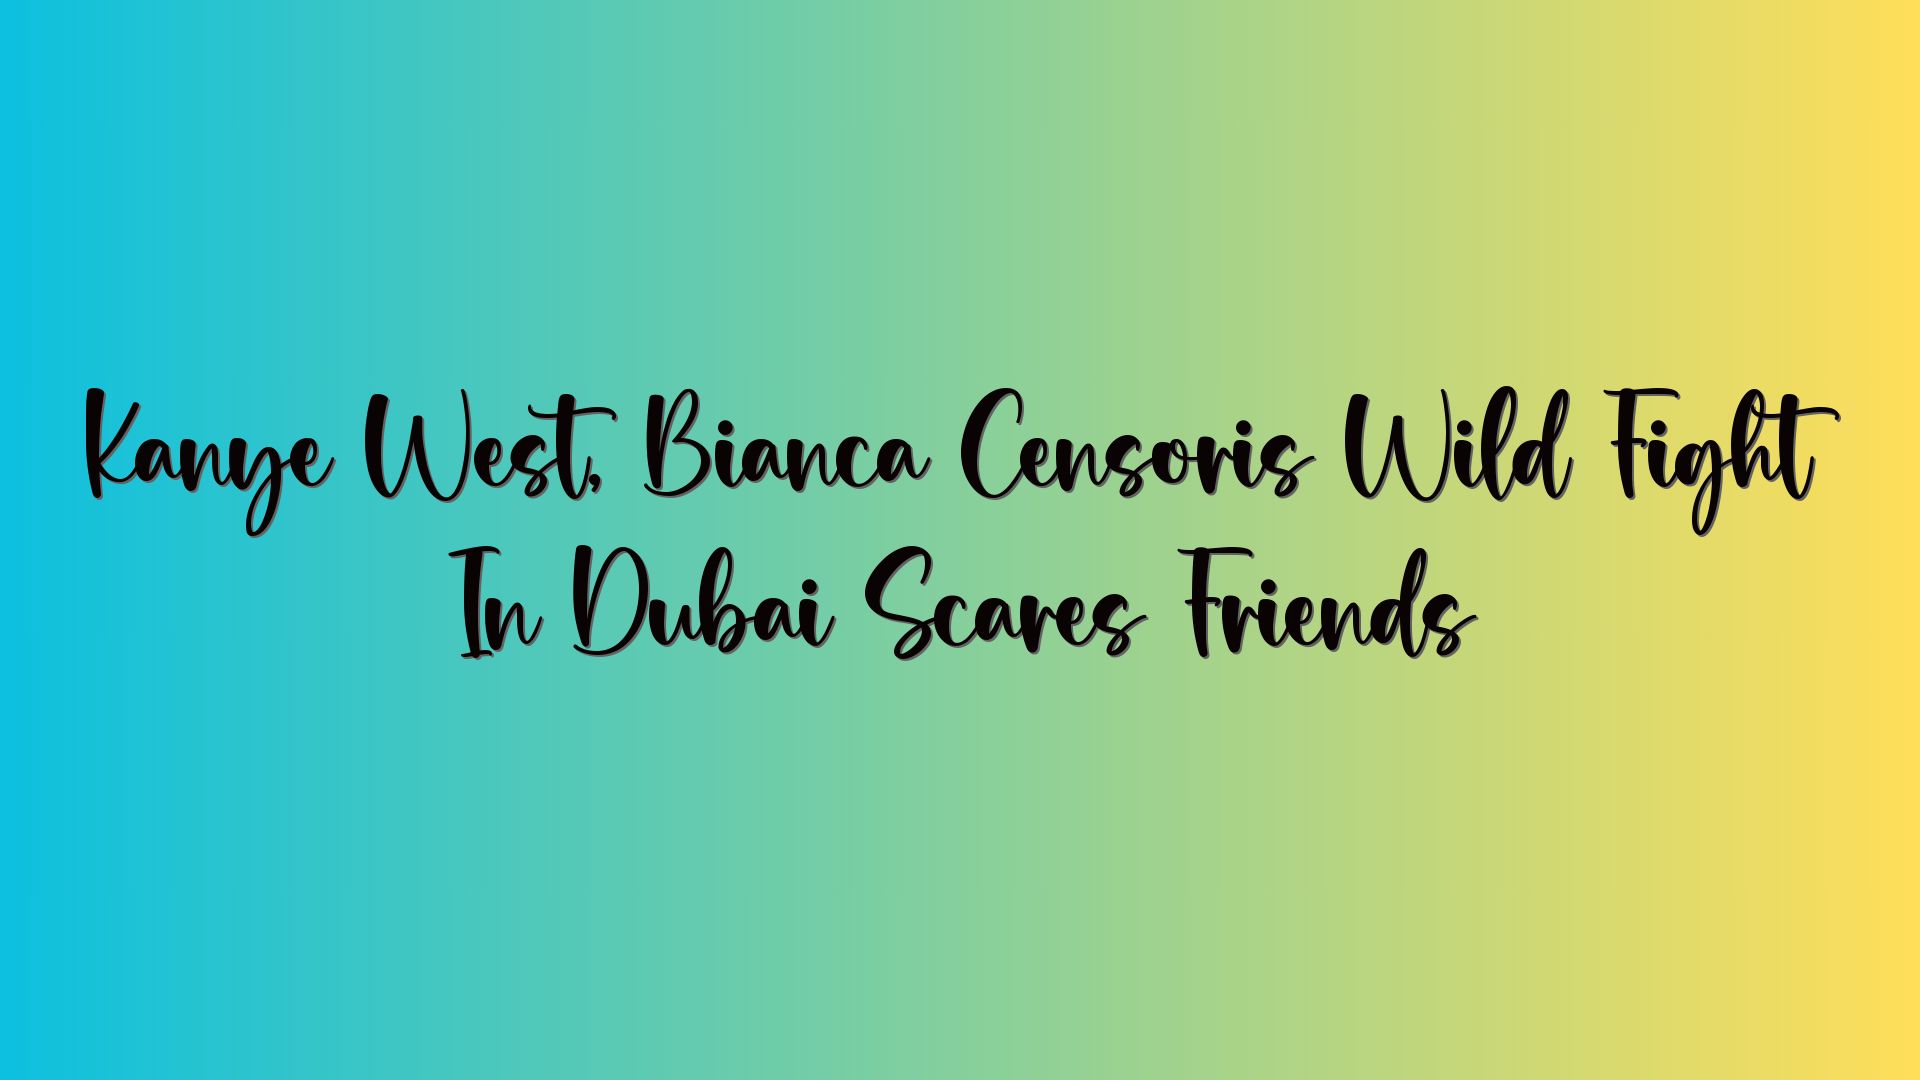 Kanye West, Bianca Censoris Wild Fight In Dubai Scares Friends